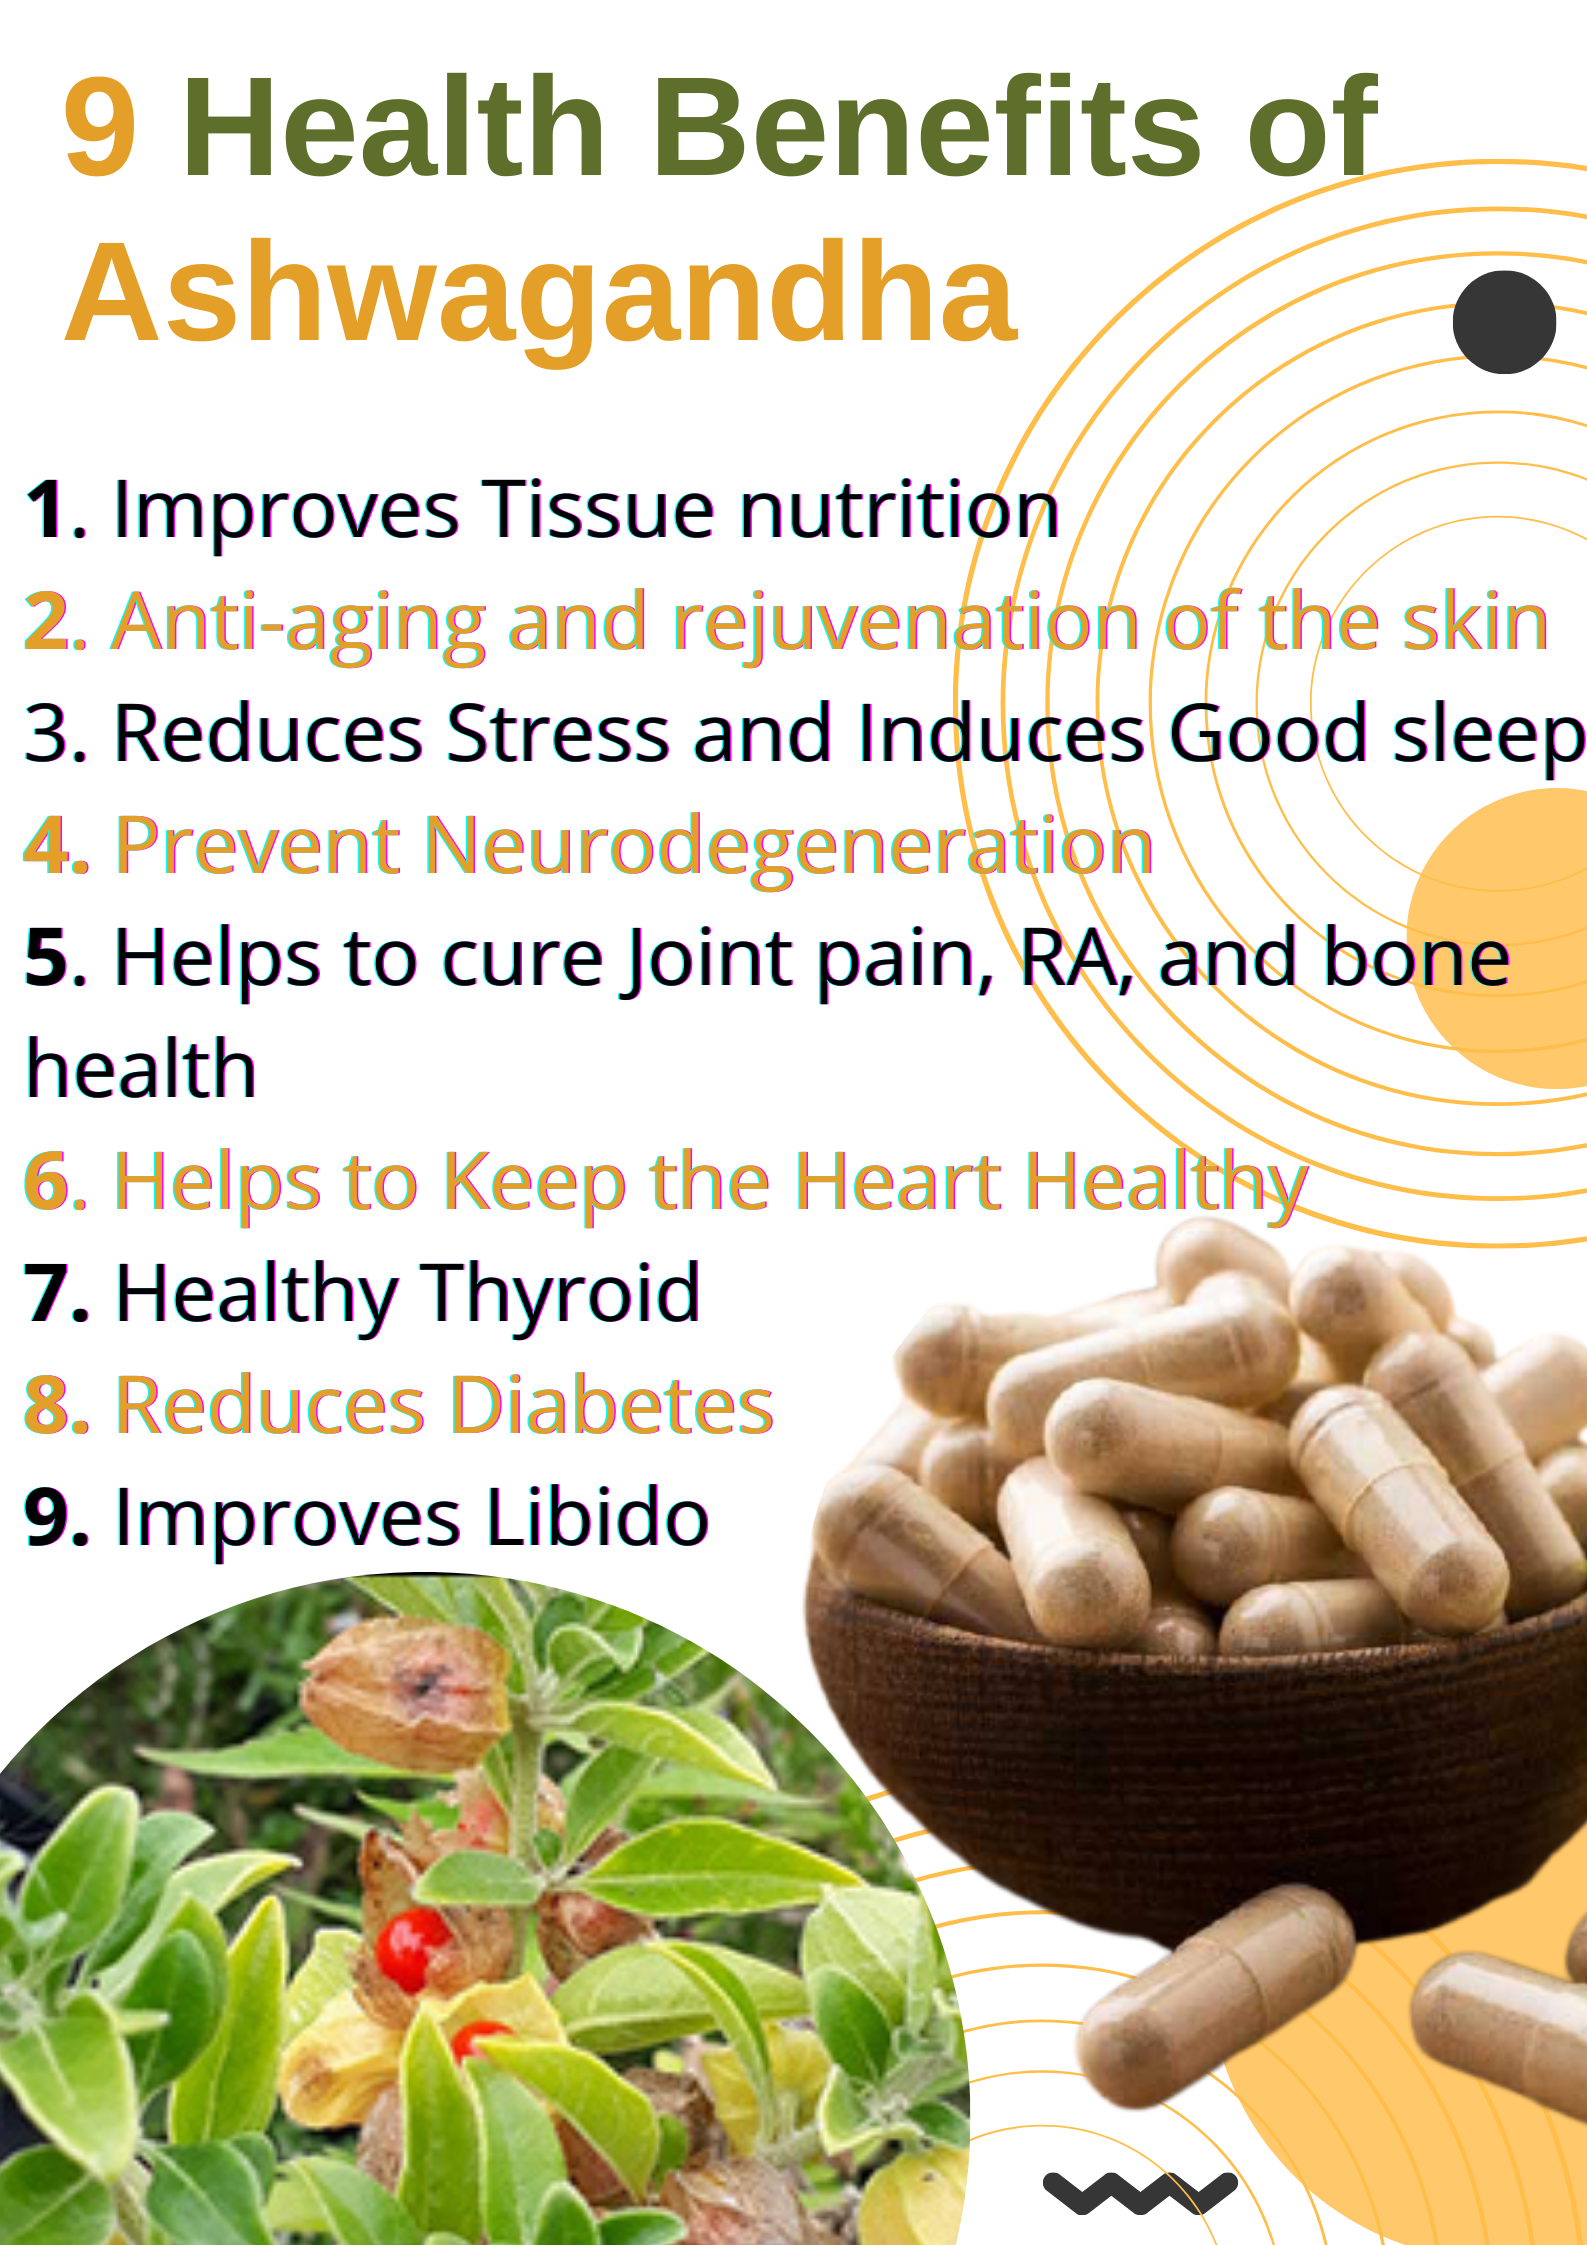 9 Health Benefits of Ashwagandha